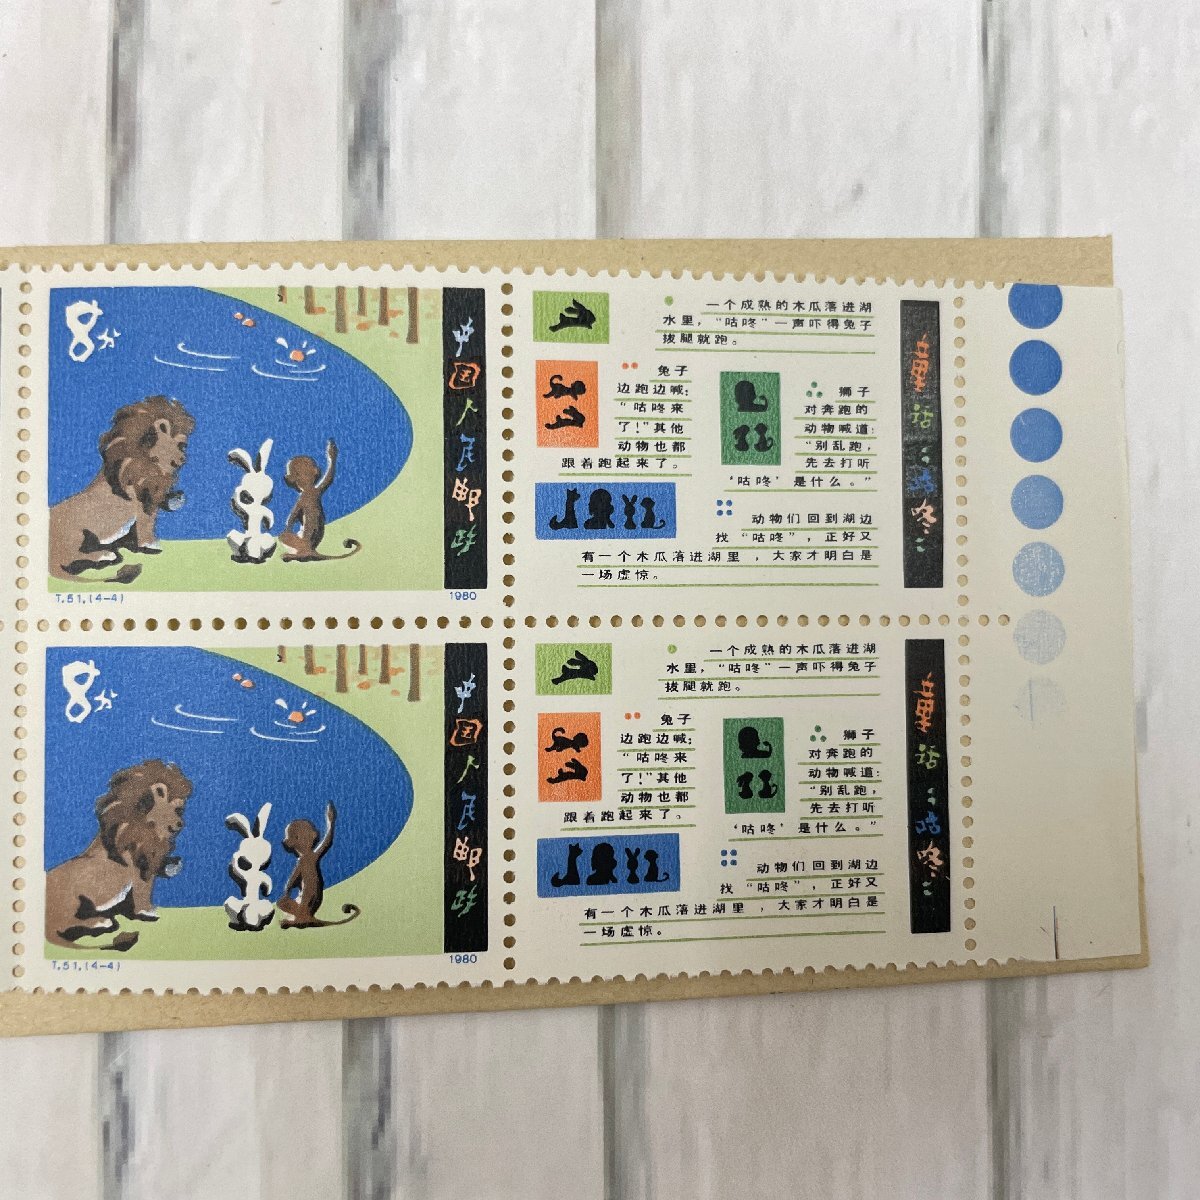 m002 H7(10) 1 postage 385 jpy China stamp storage goods fairy tale bo tea n1980 year T.51 4 kind . booklet stamp .